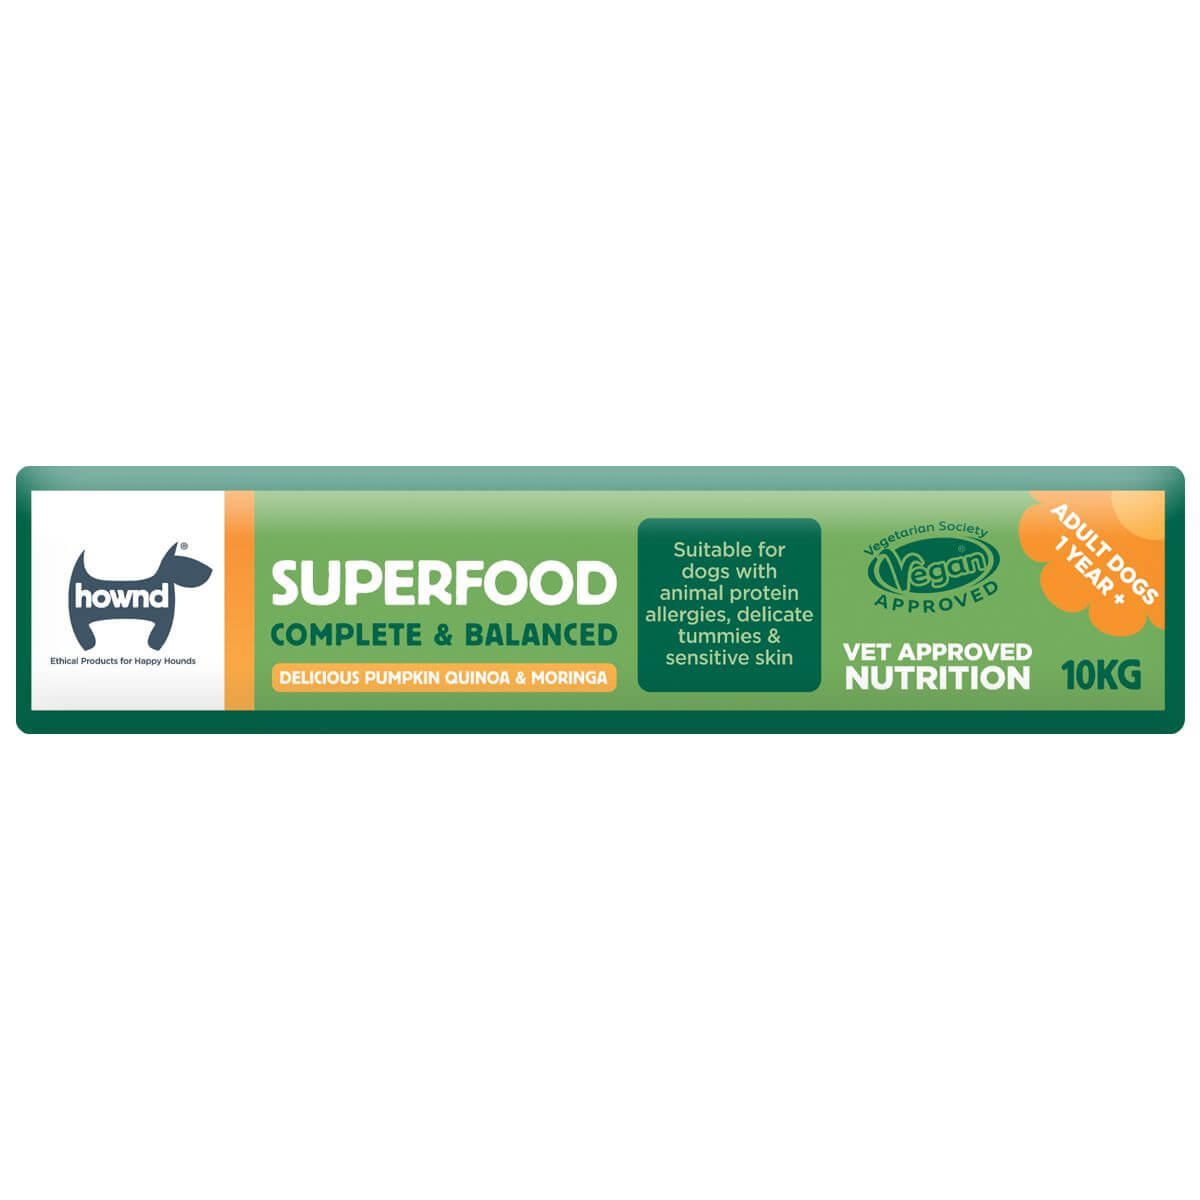 Delicious Pumpkin Quinoa Moringa Hypoallergenic Dry Dog Food - 10kg bottom